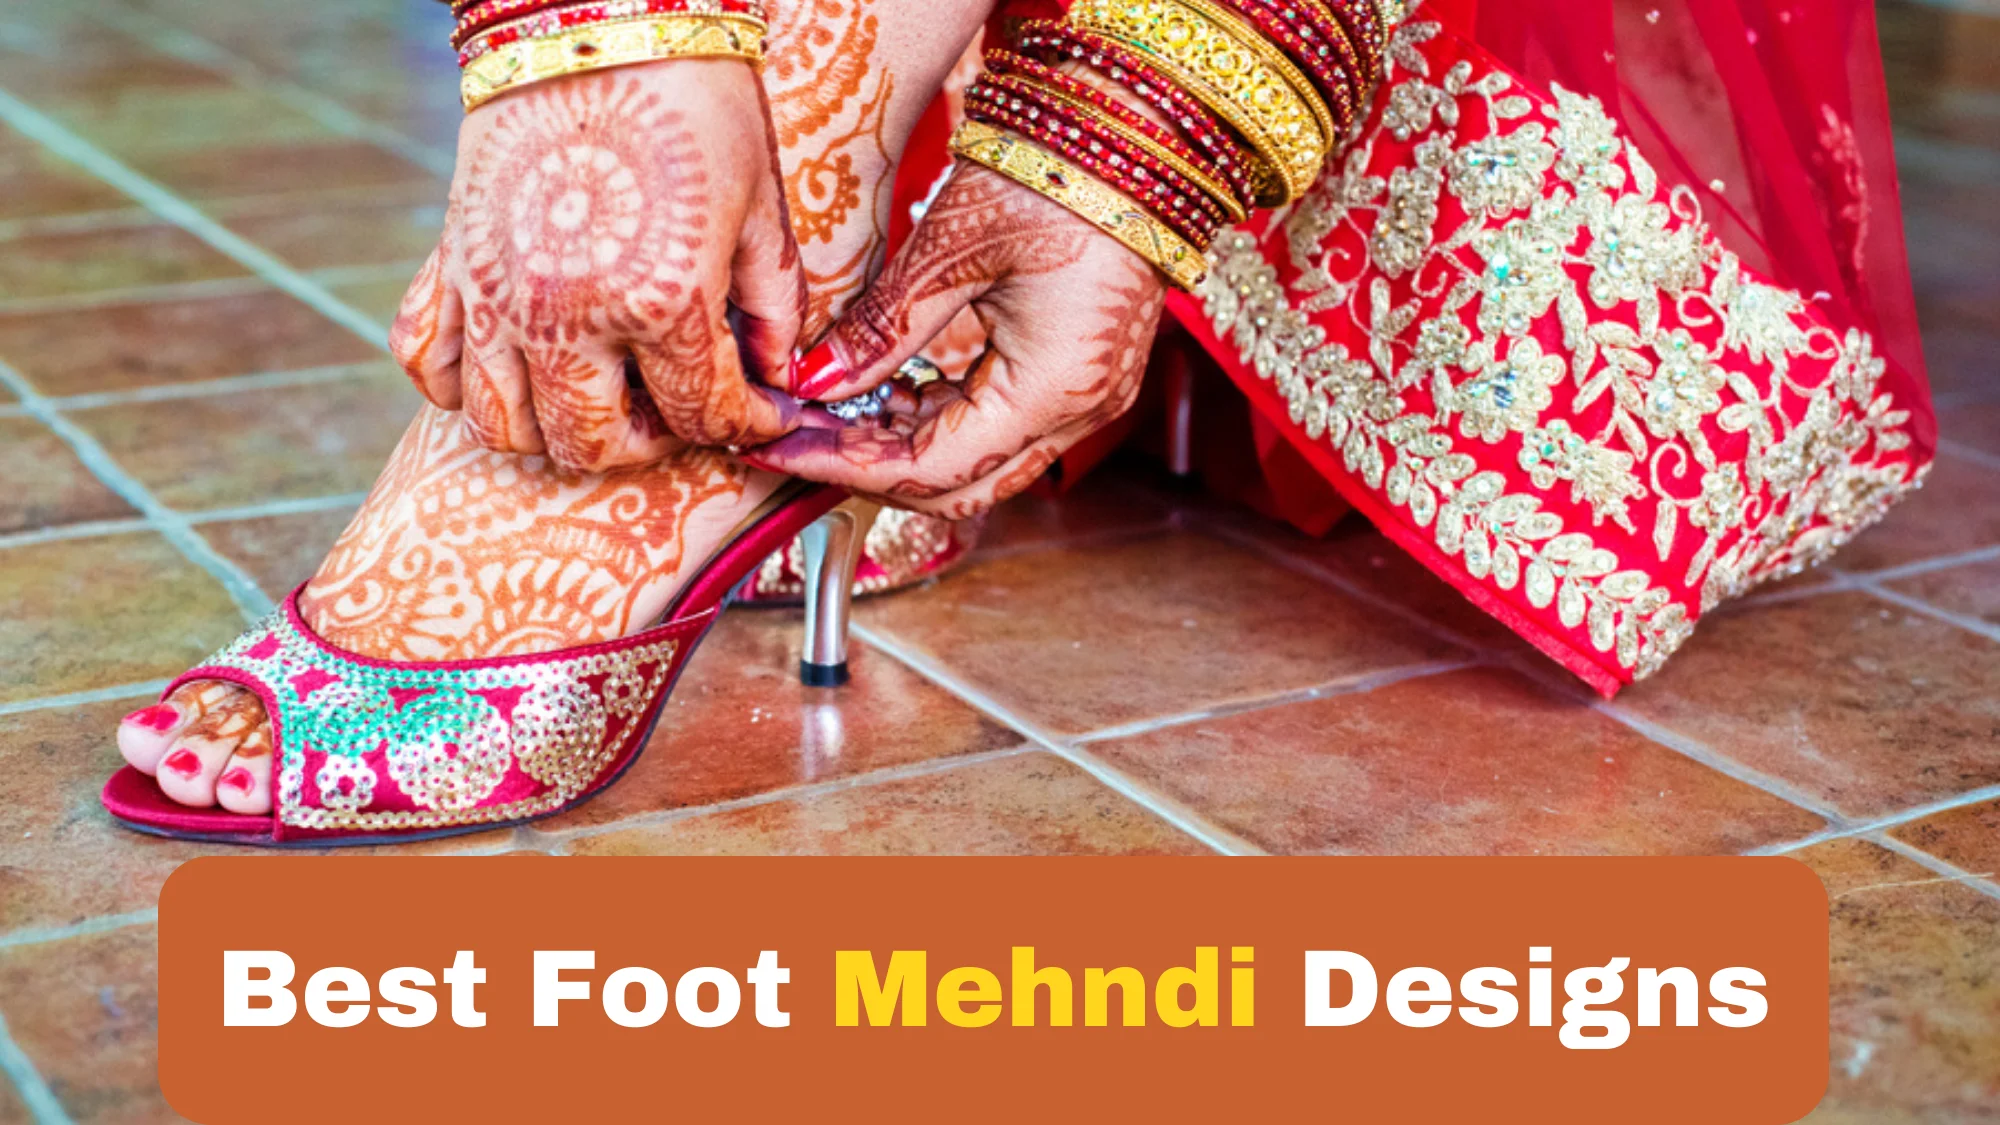 Best Foot Mehndi Designs